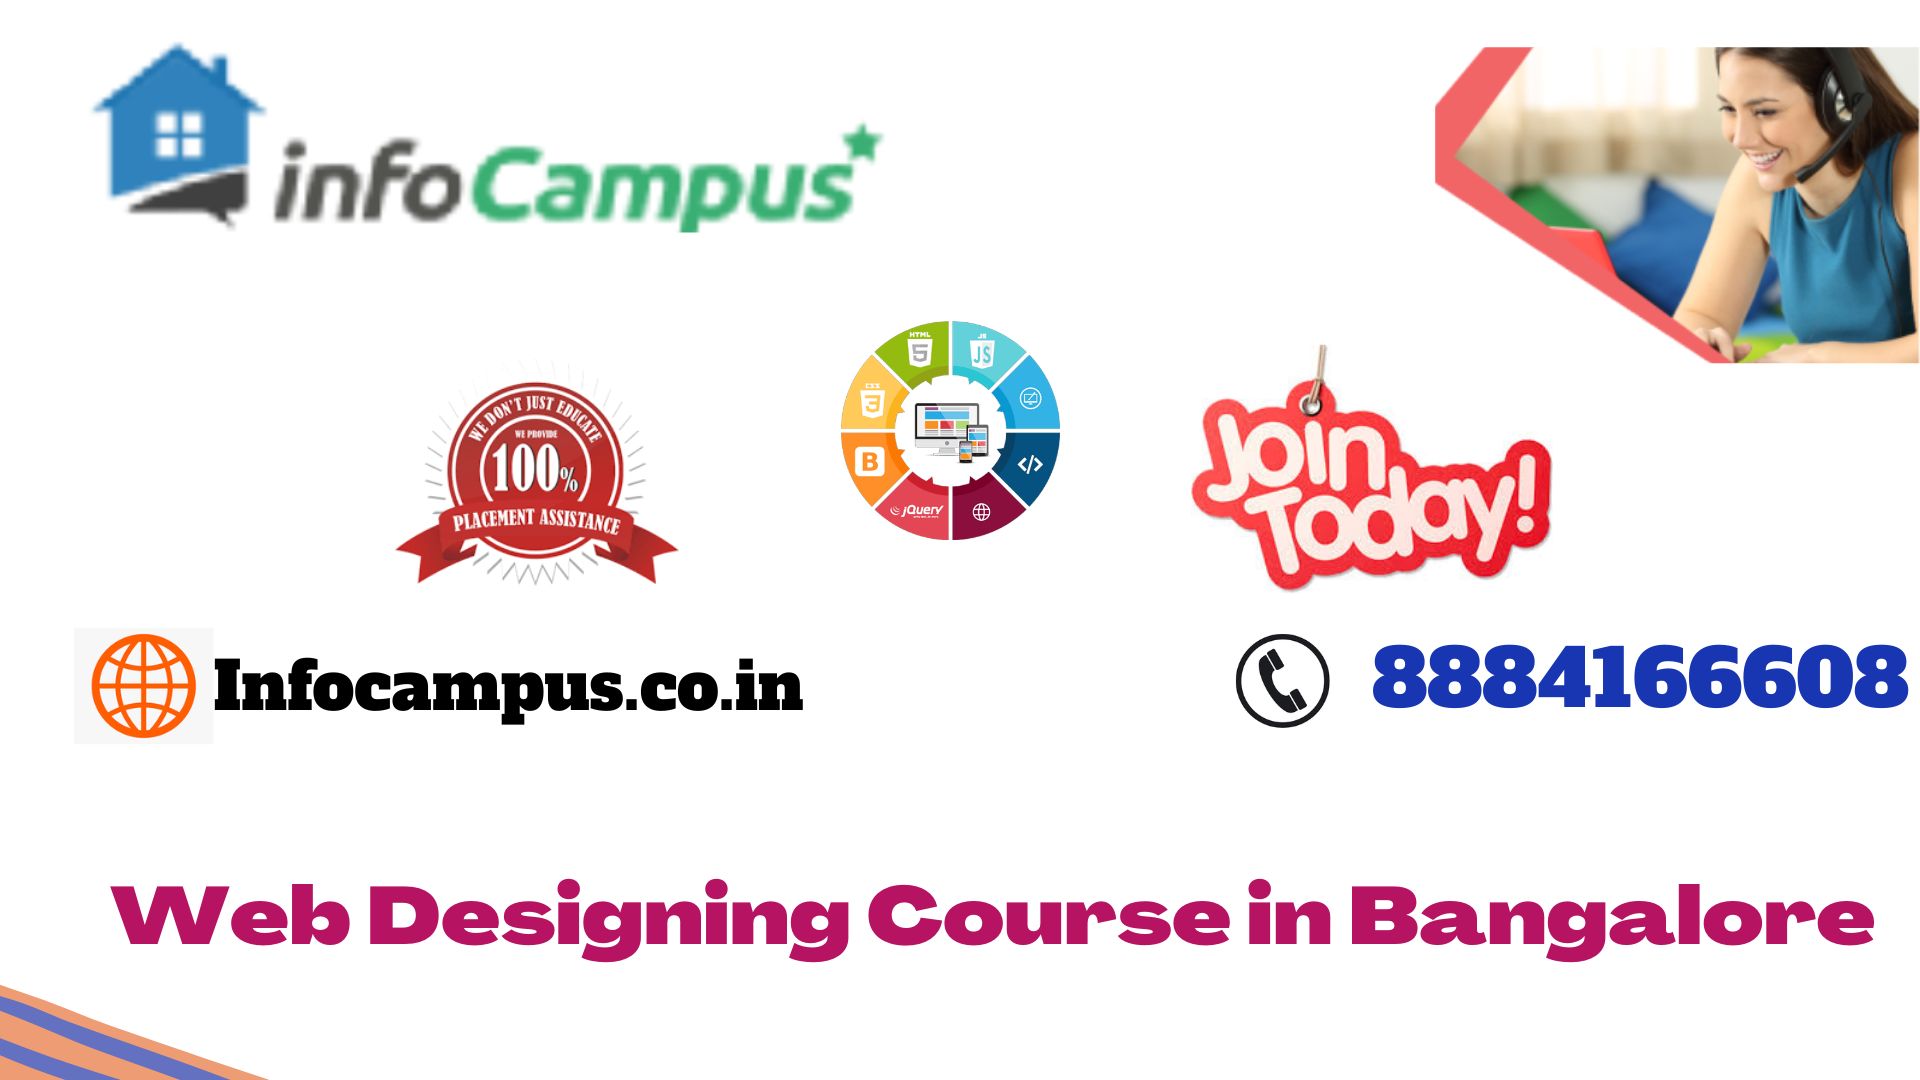  Web designing course in bangalore